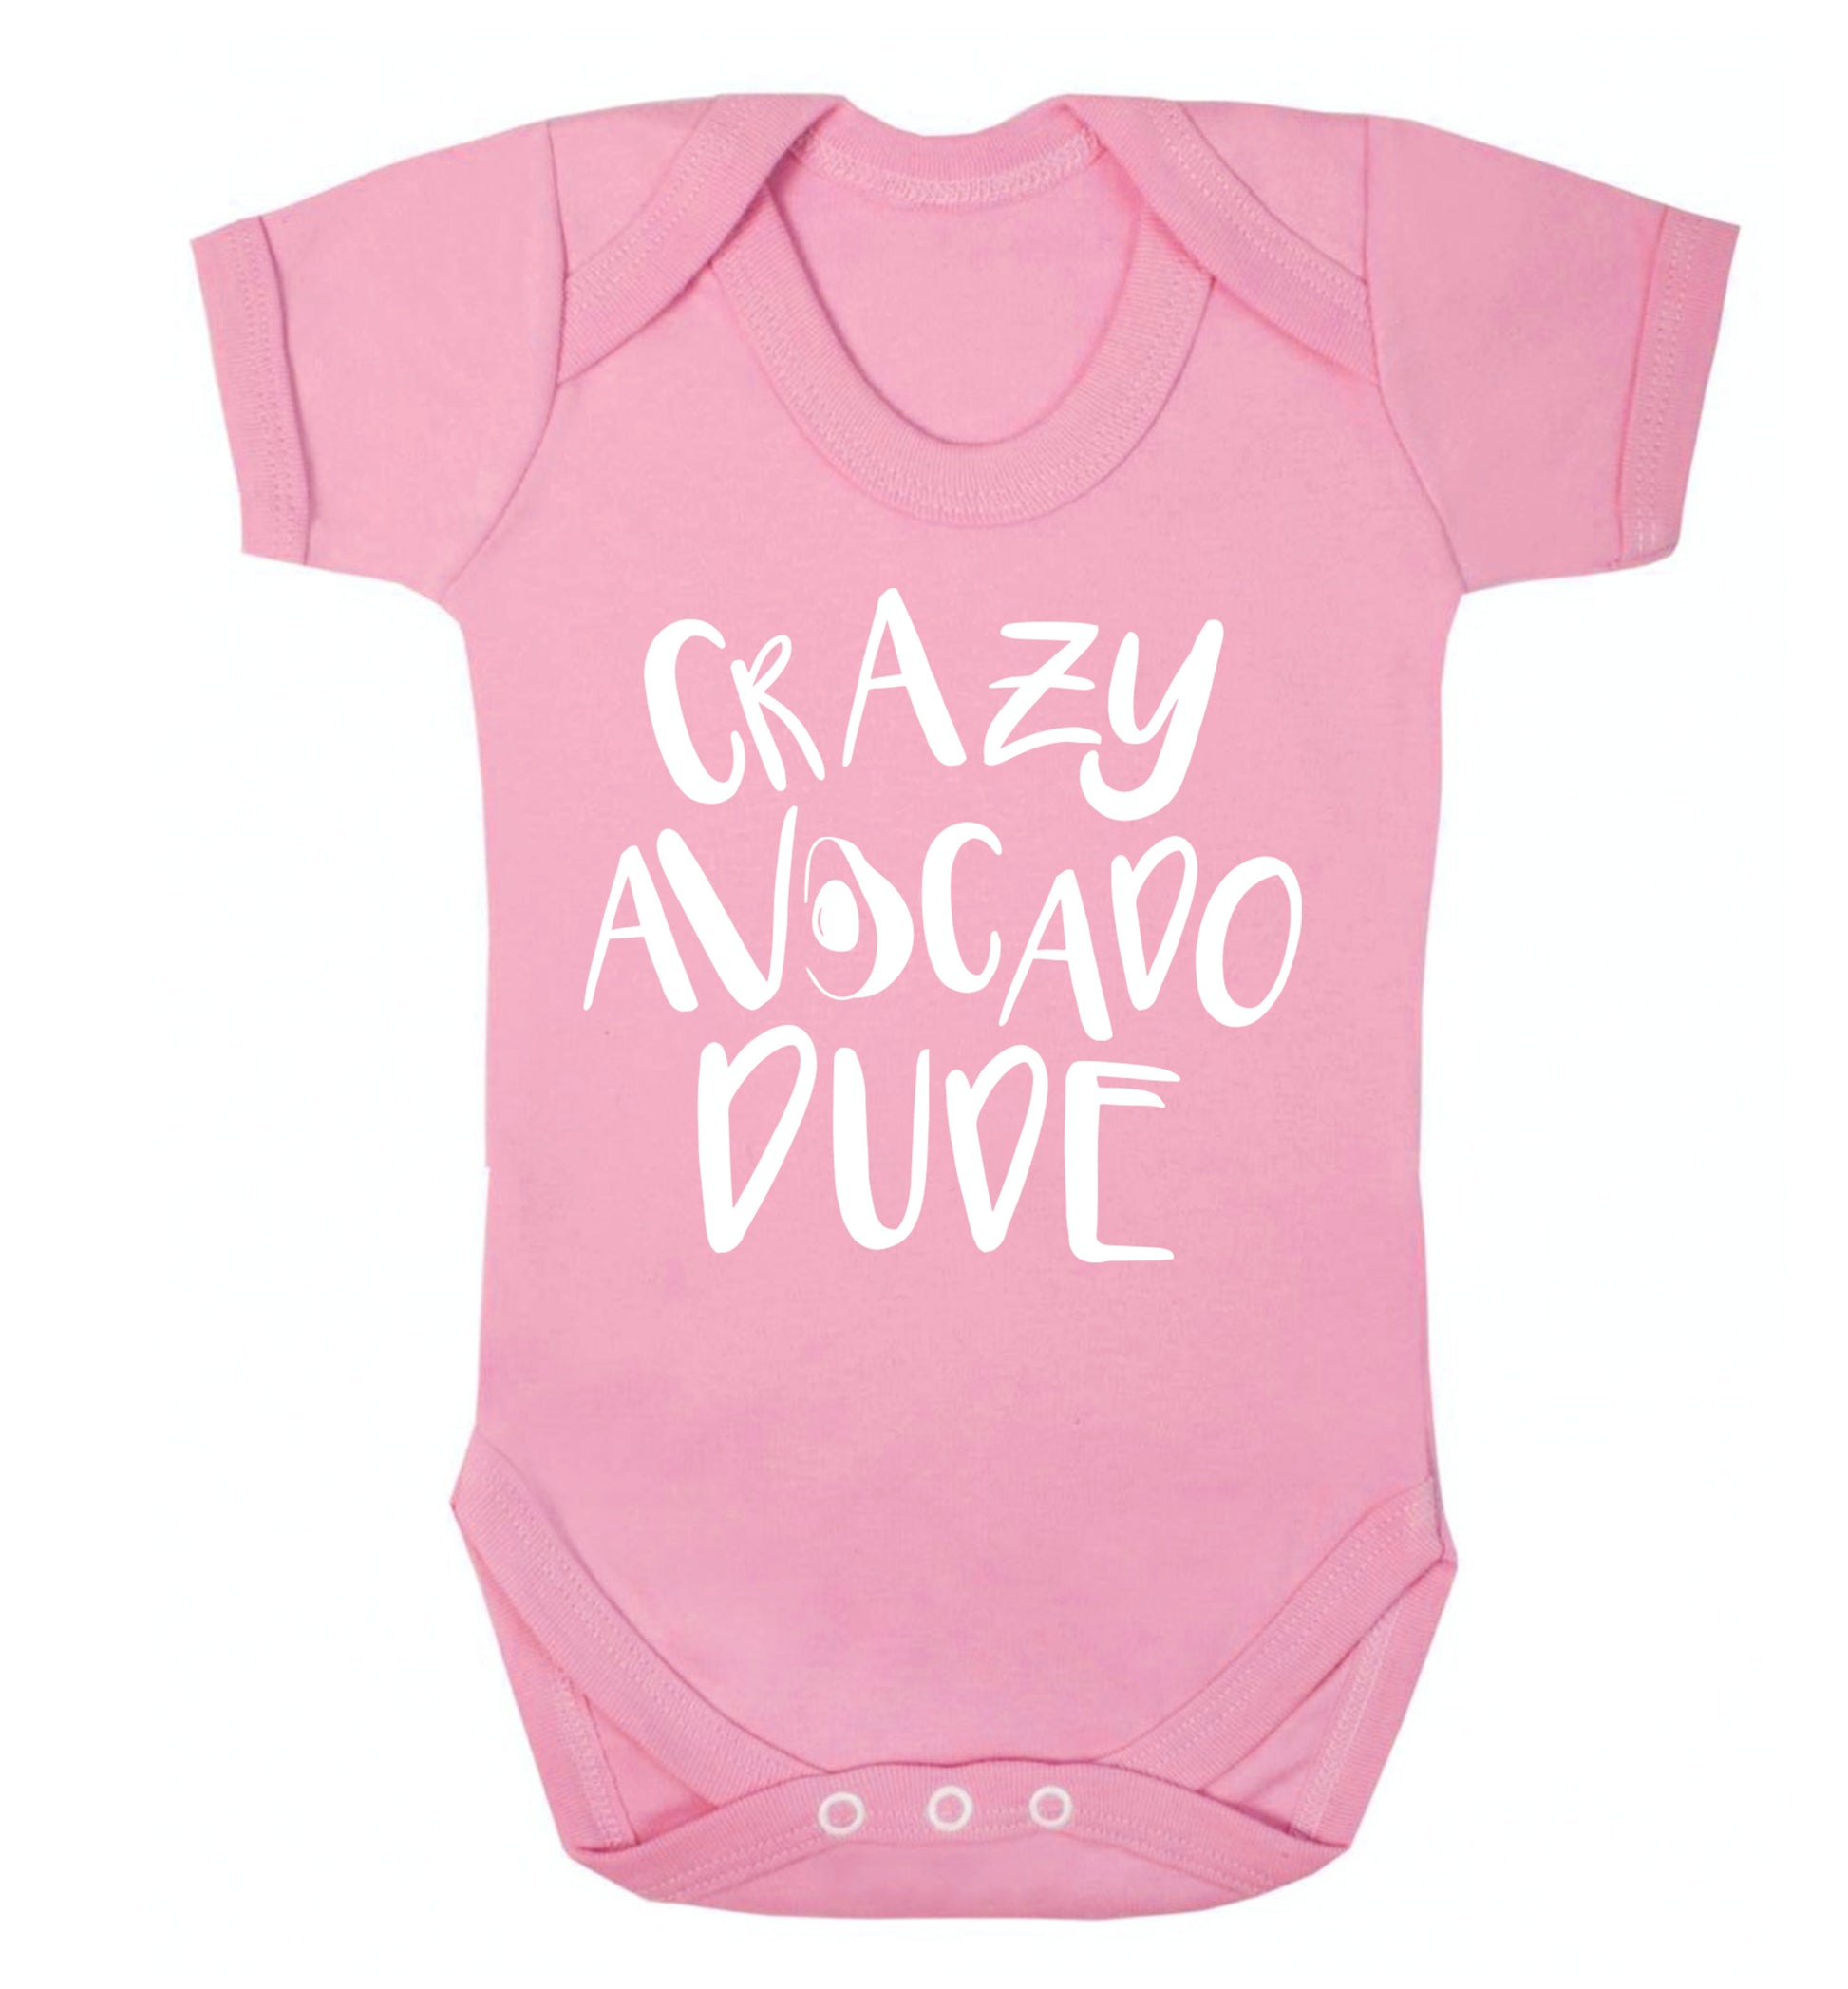 Crazy avocado dude Baby Vest pale pink 18-24 months